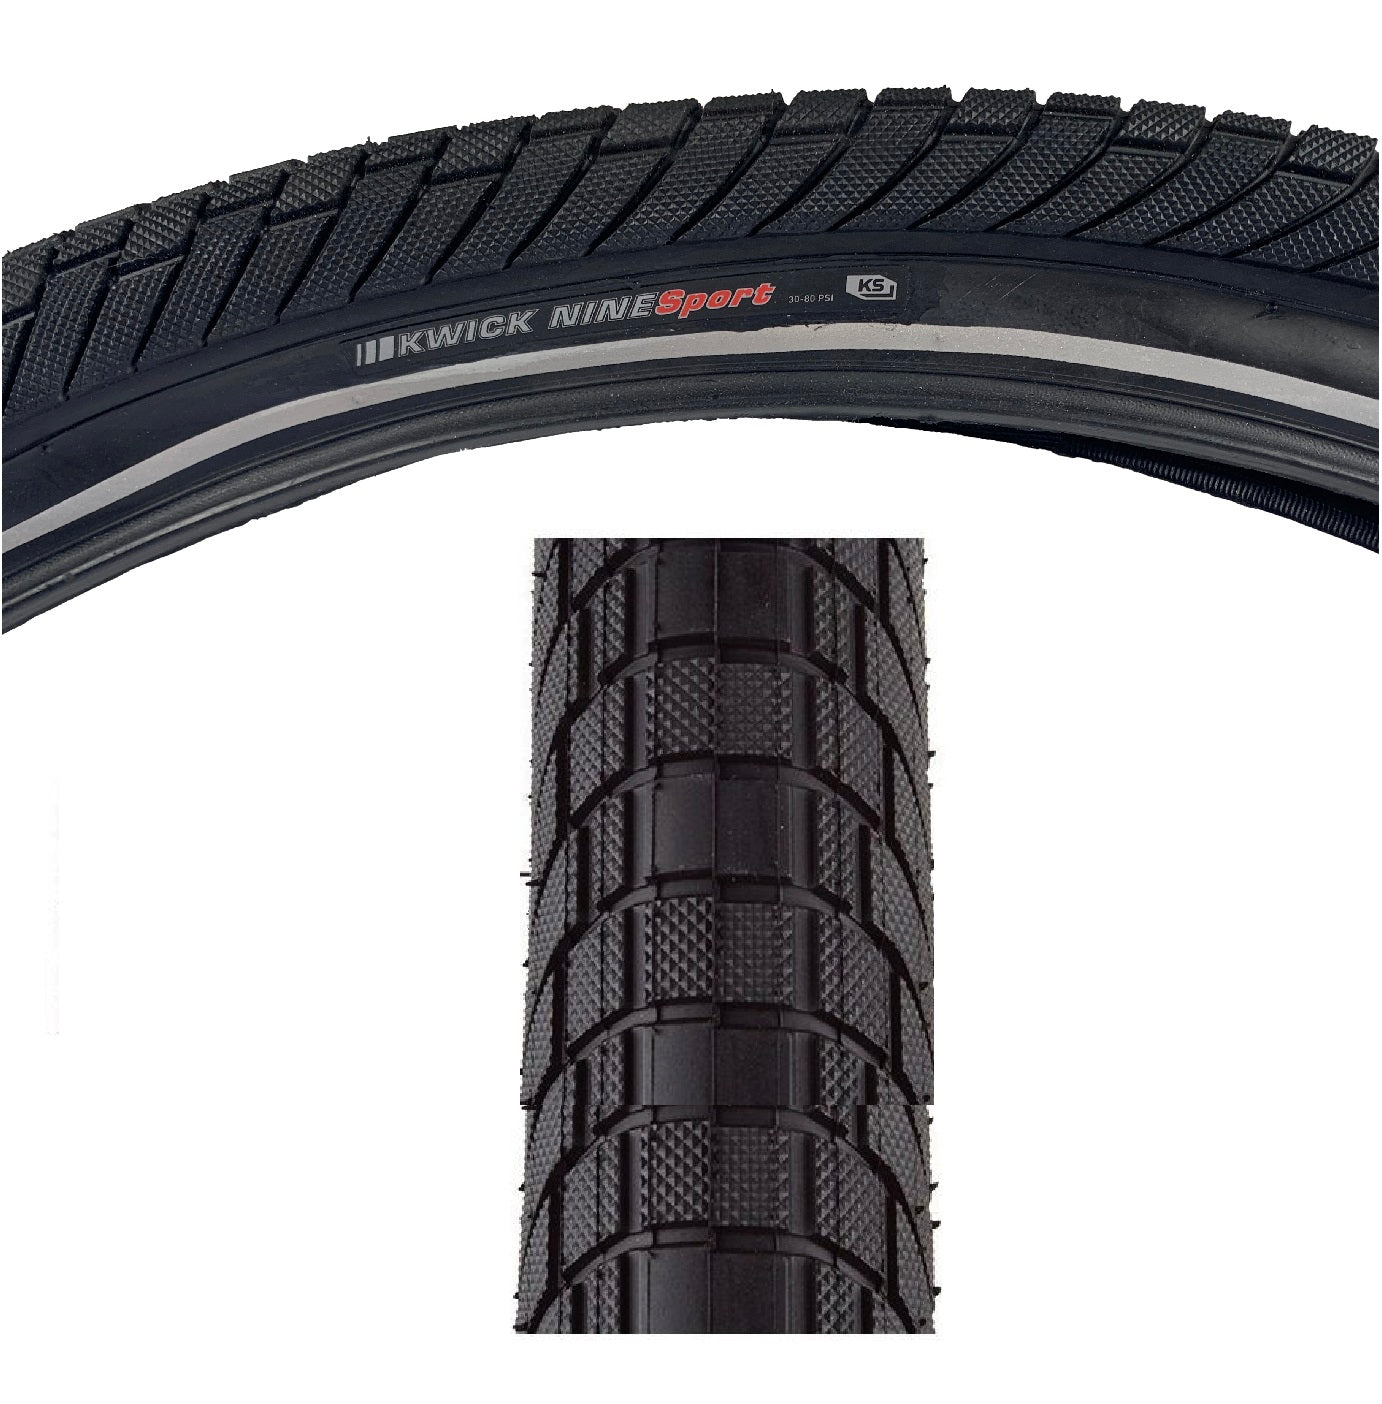 Buy black Kenda K1052 Kwick Nine 29x2.0 Tire